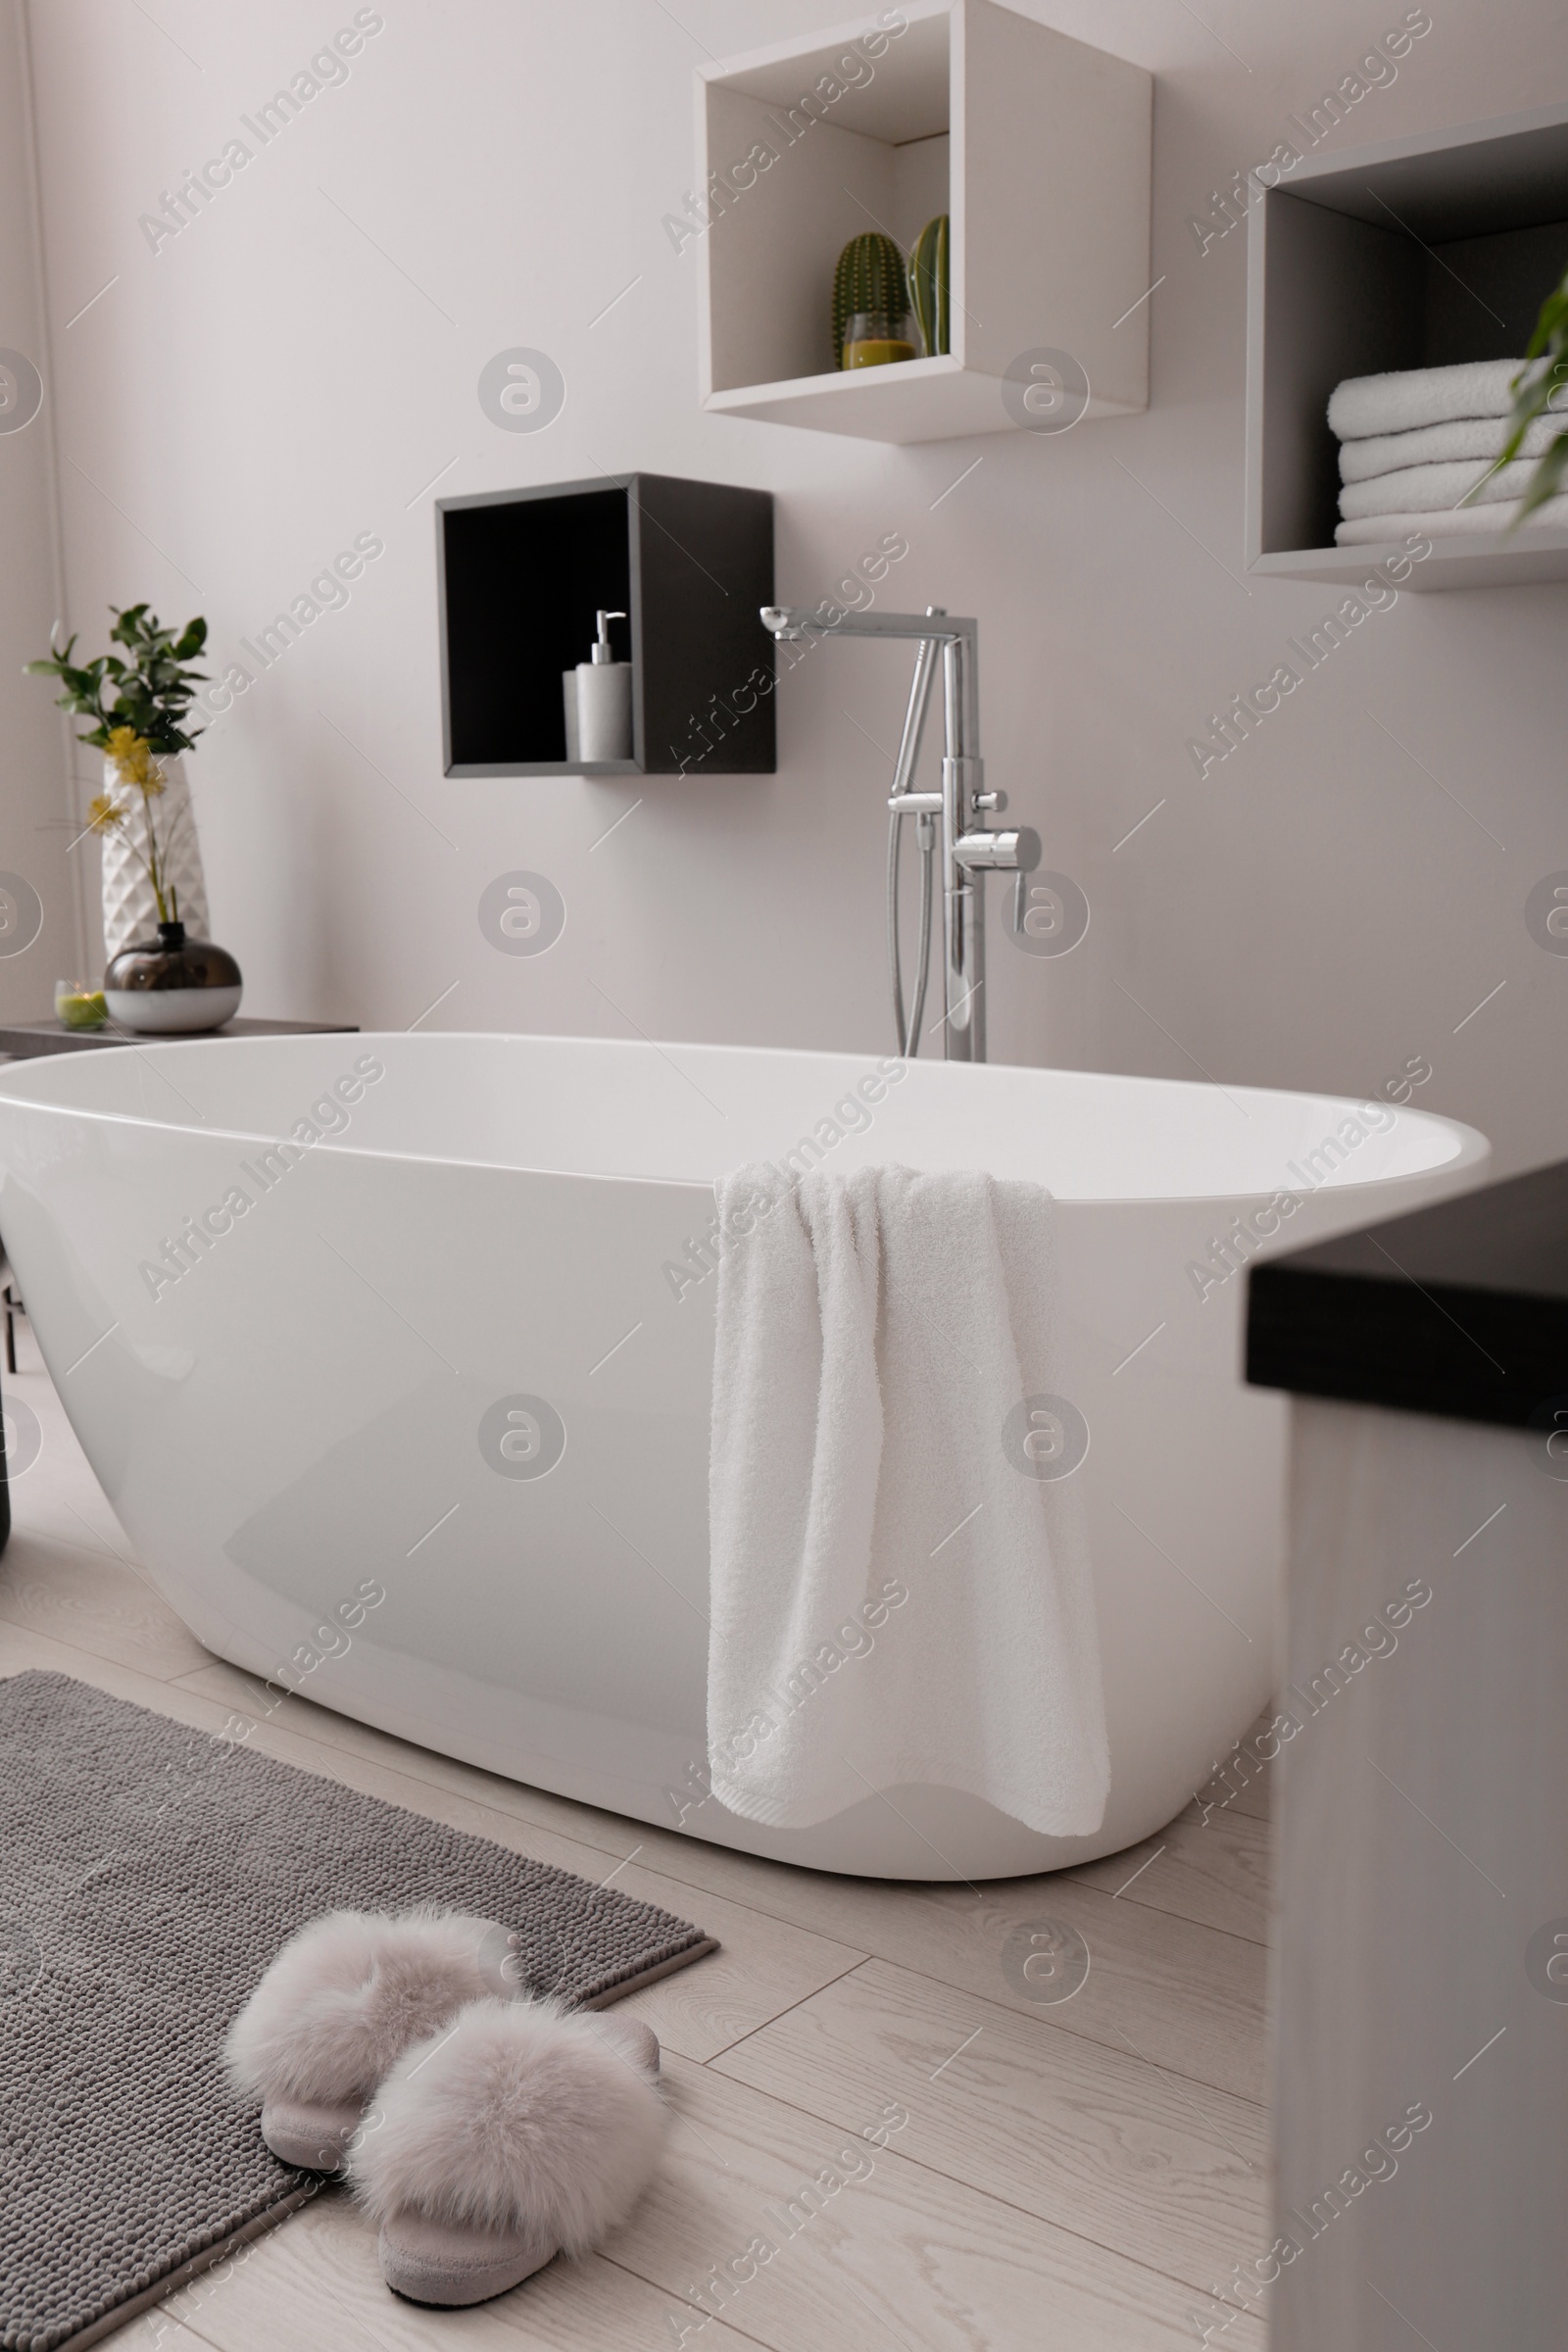 Photo of Stylish bathroom interior with modern white tub